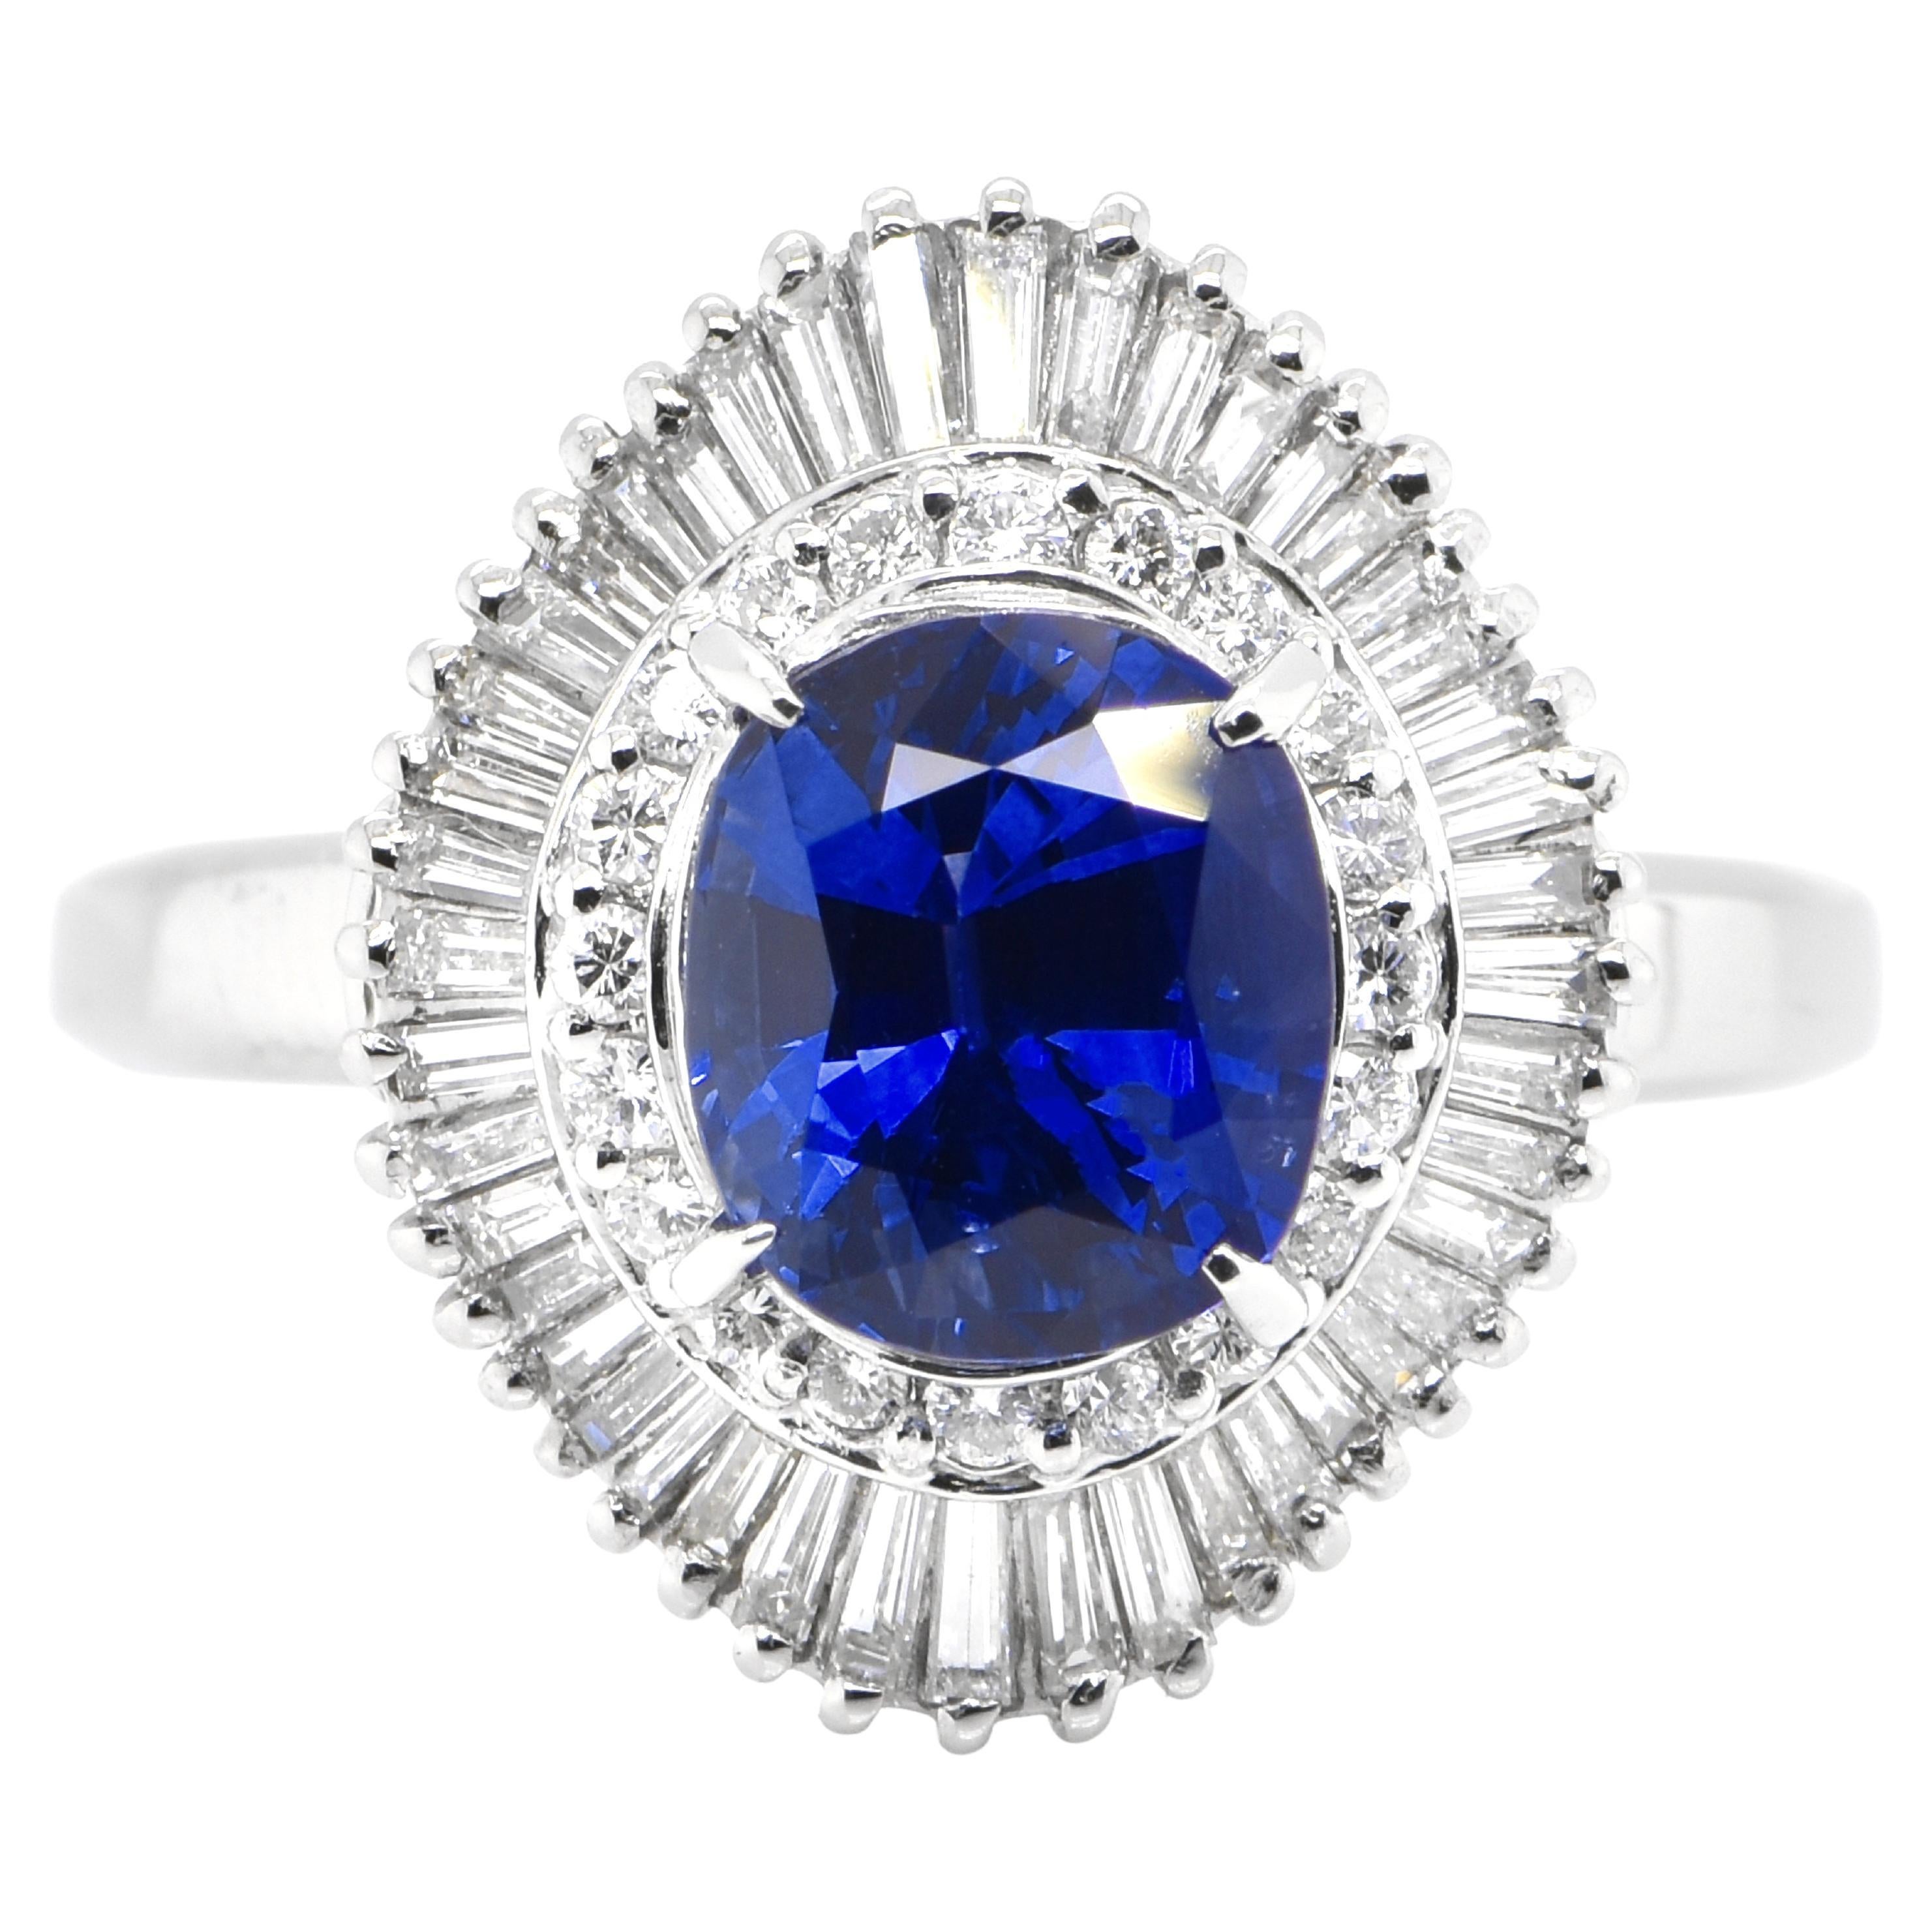 3.04 Carat Natural Blue Sapphire and Diamond Ballerina Ring Set in Platinum